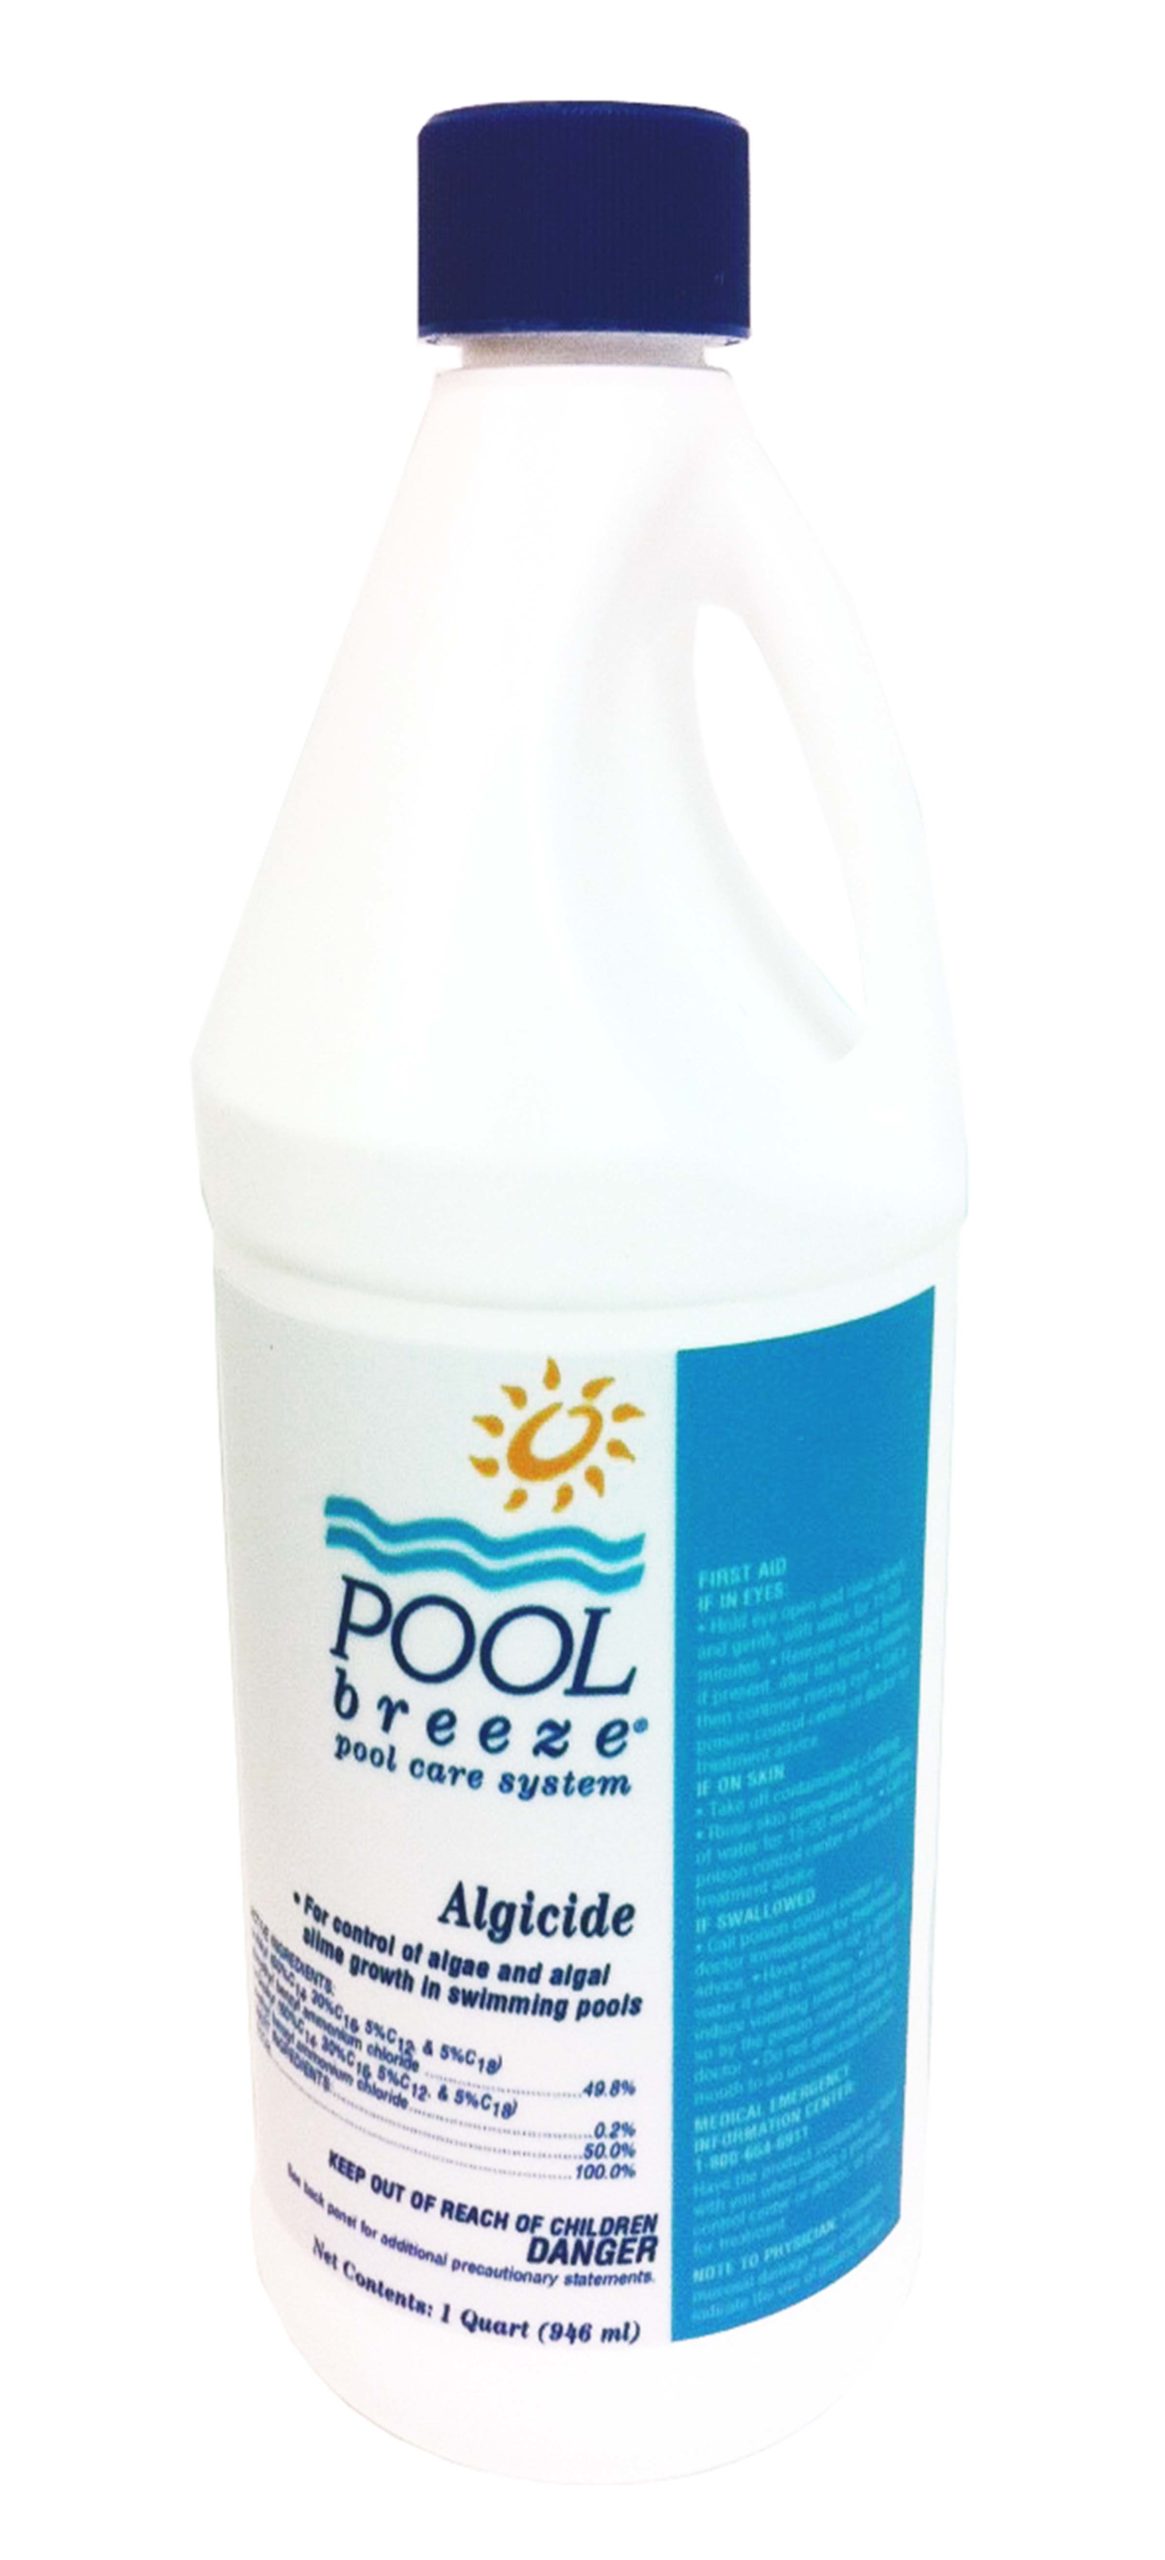 POOL Breeze Algicide - swimming pool algaecide